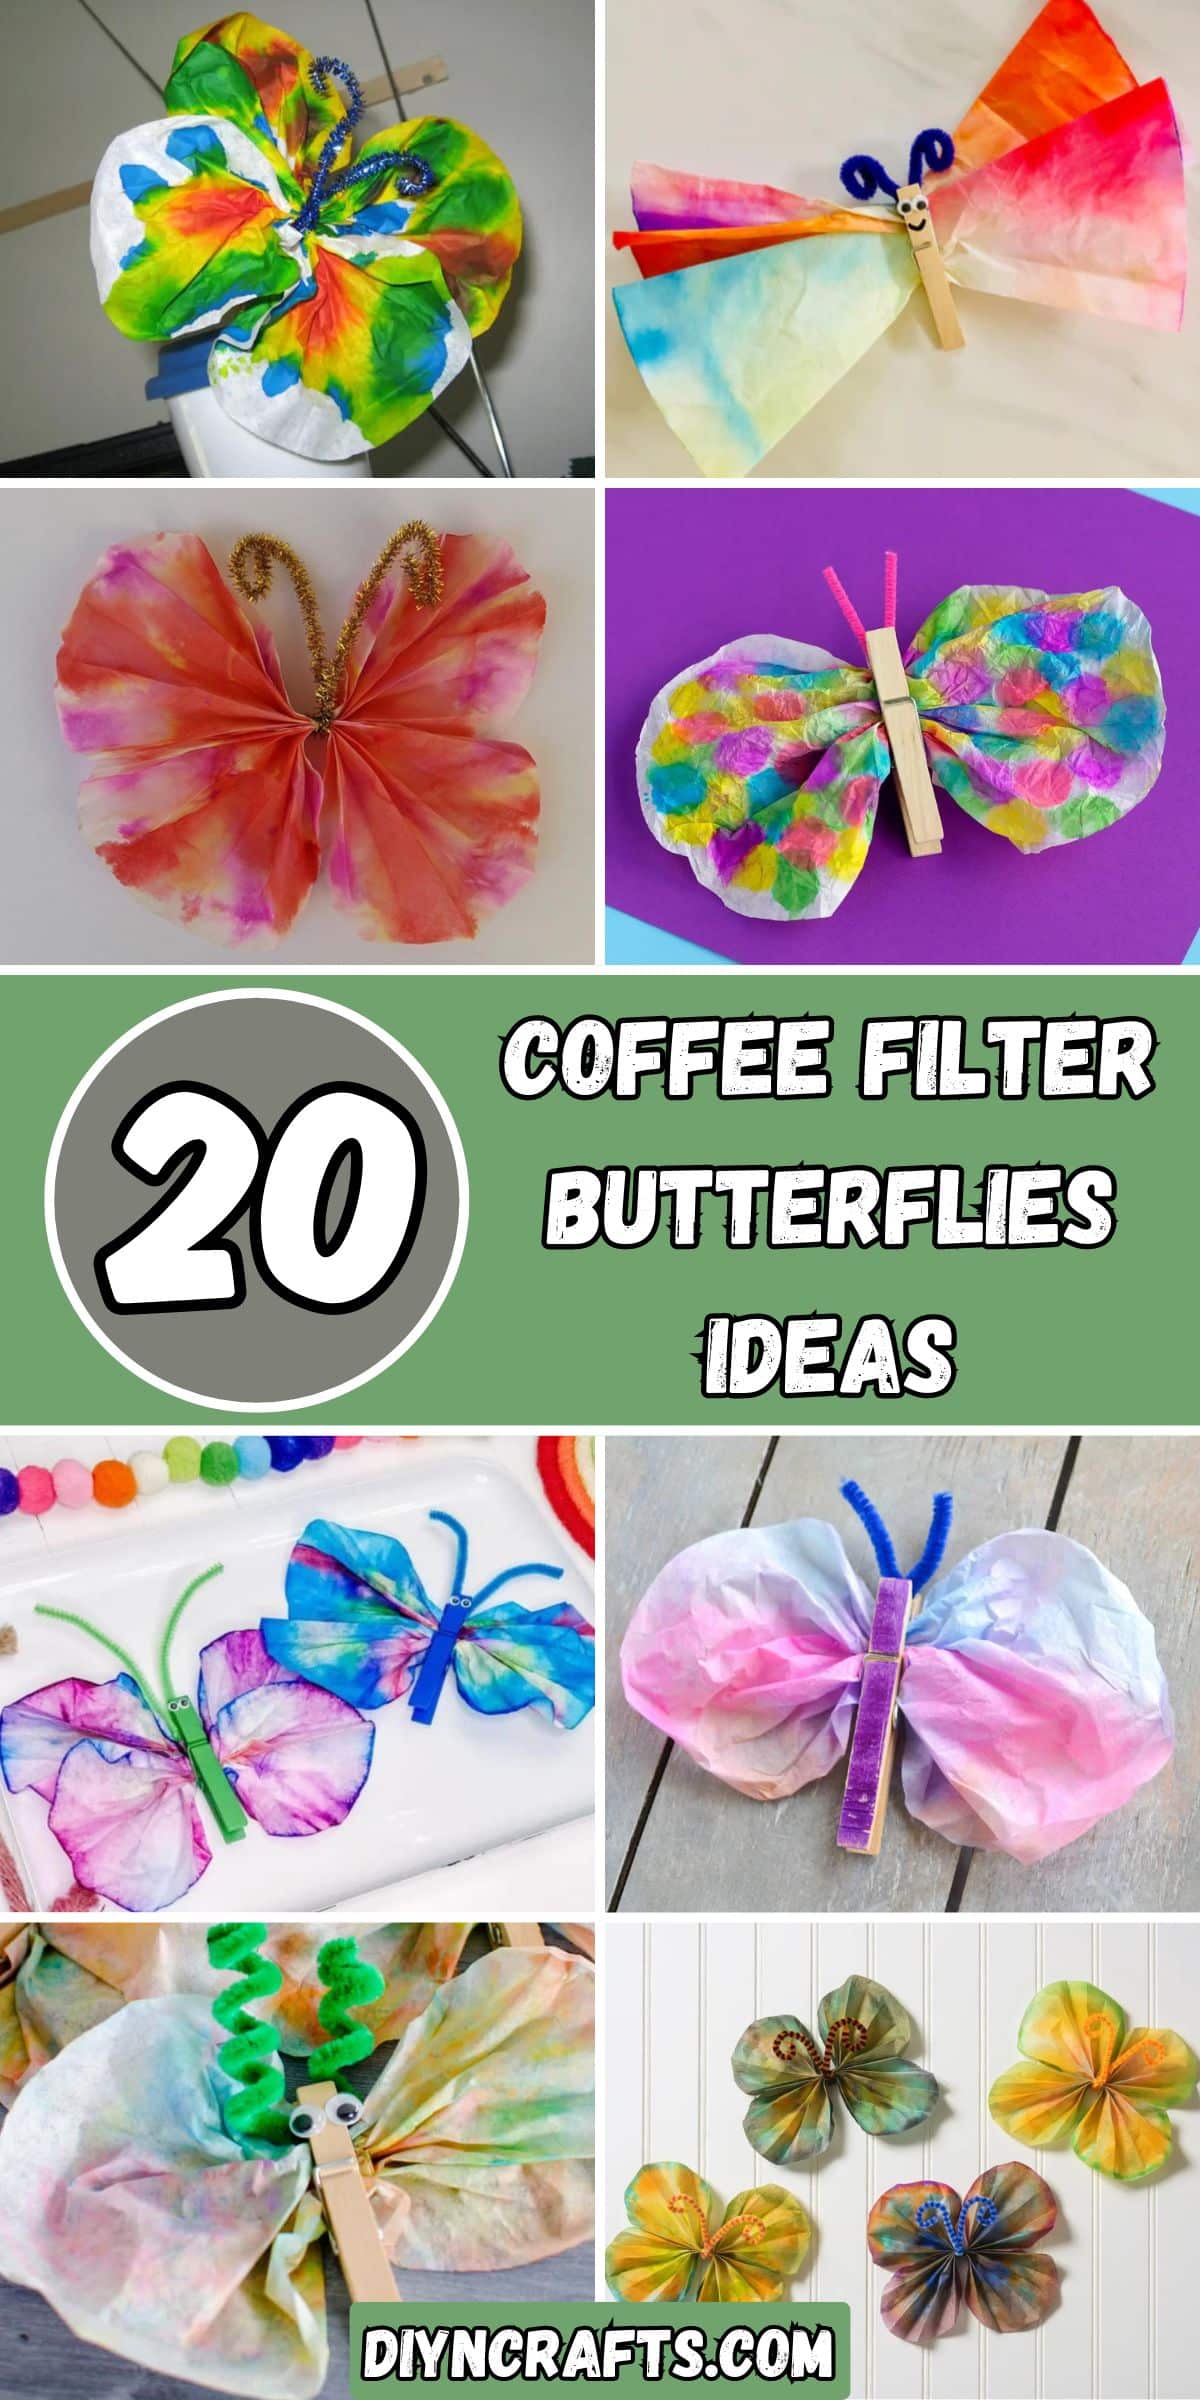 20 Coffee Filter Butterflies Ideas collage.